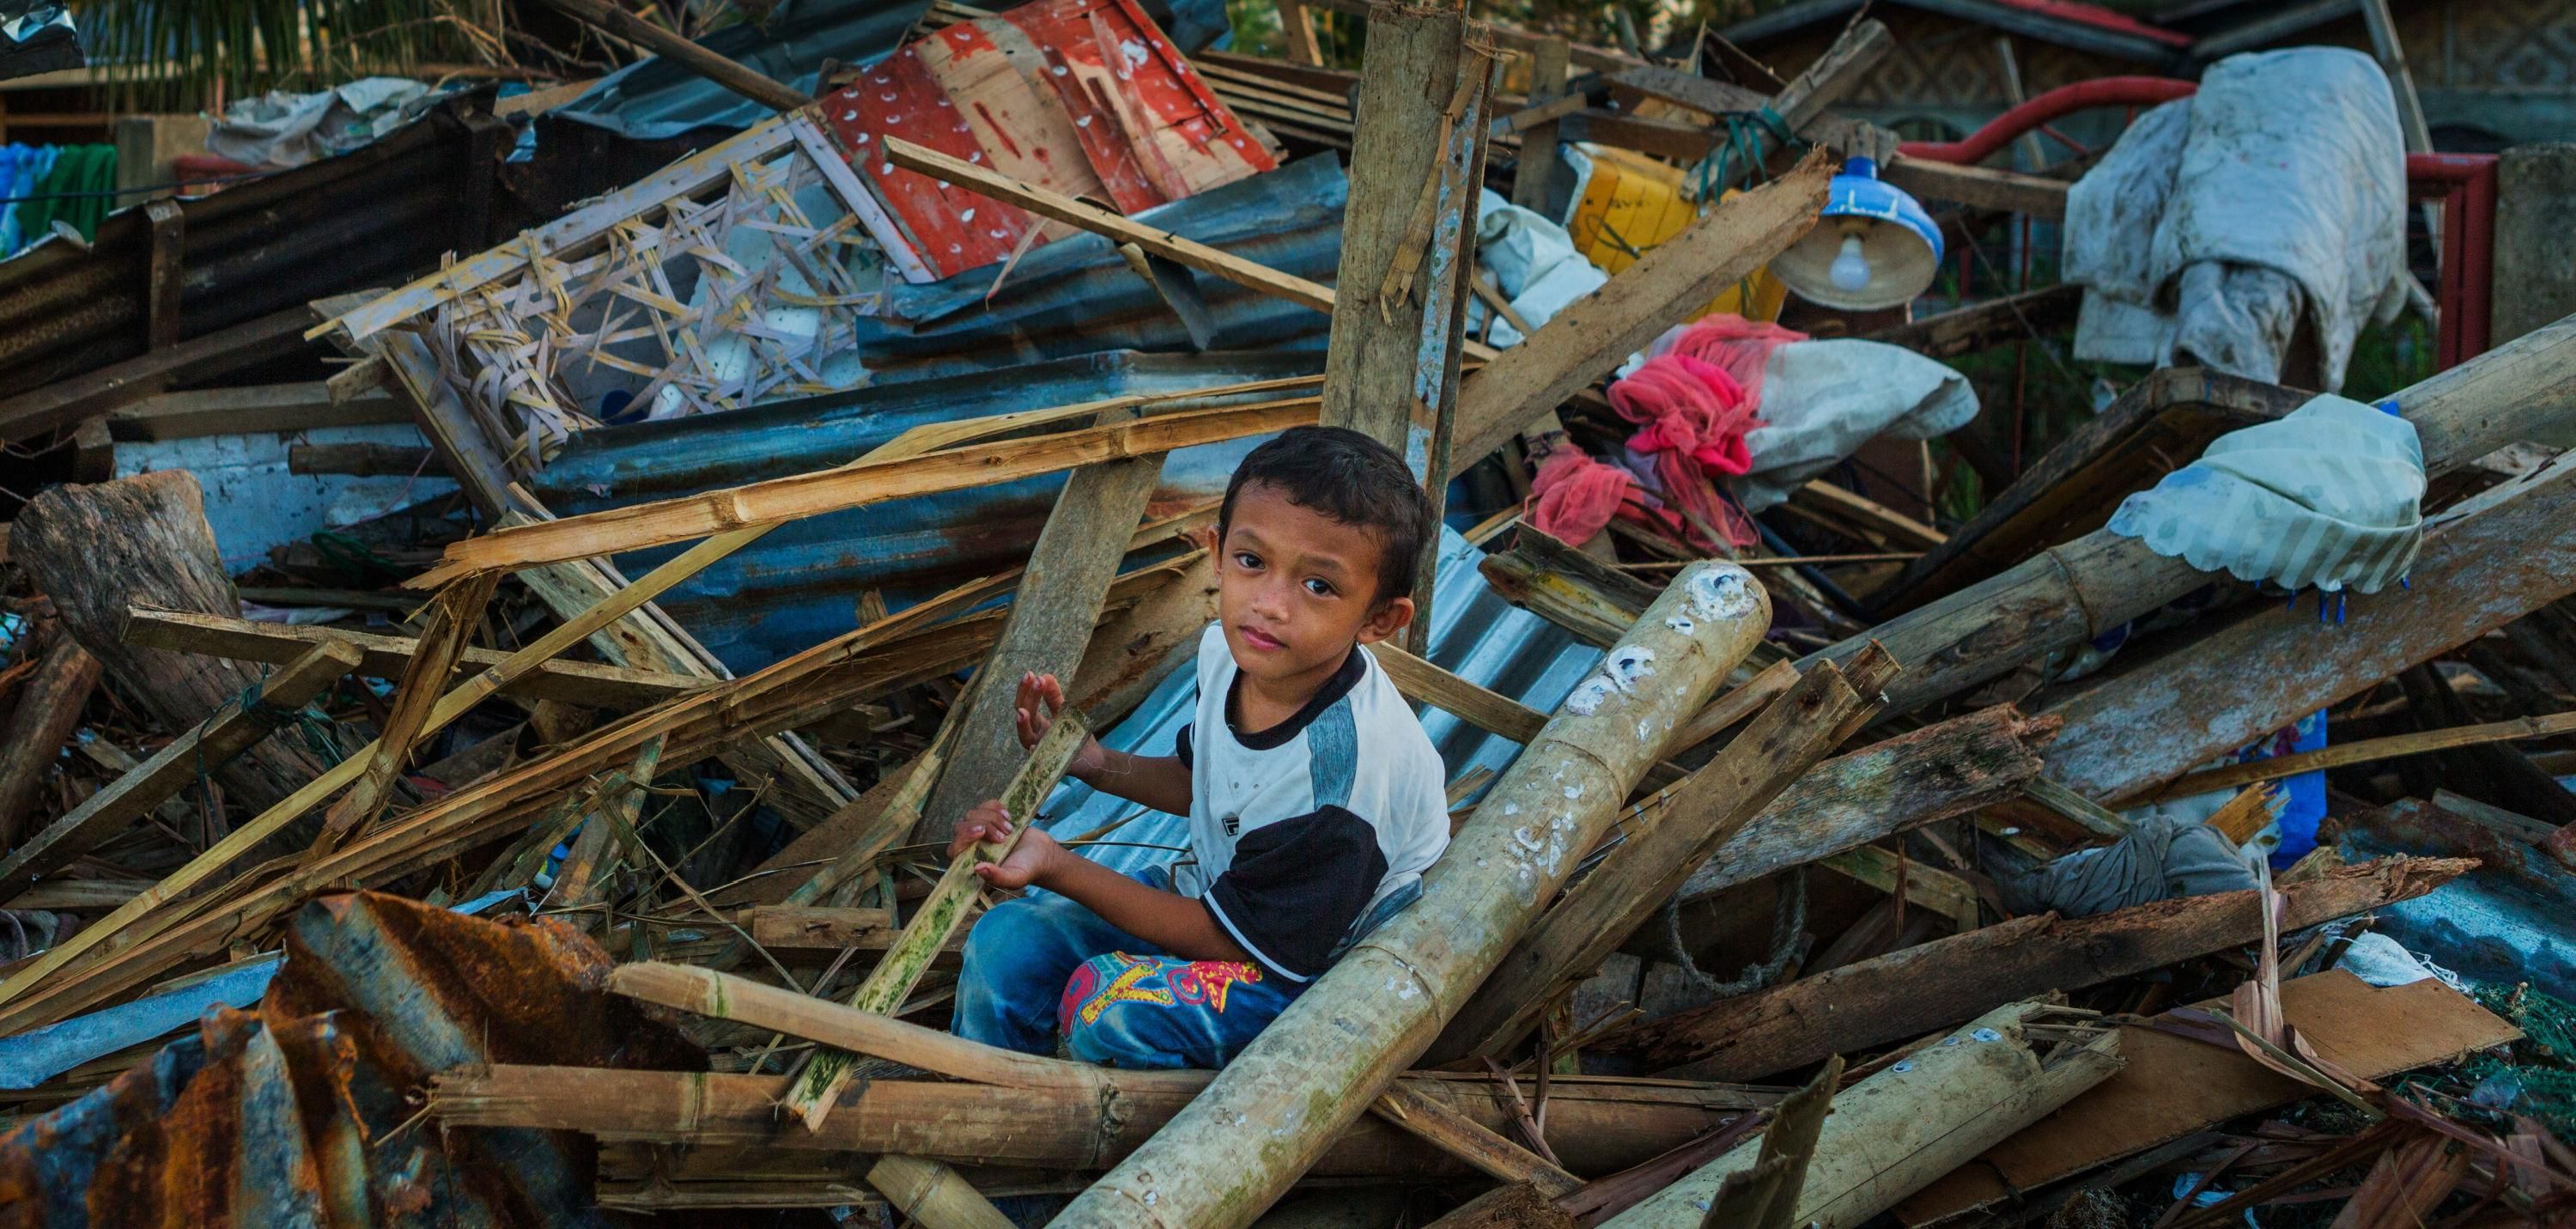 Child in typhoon debris